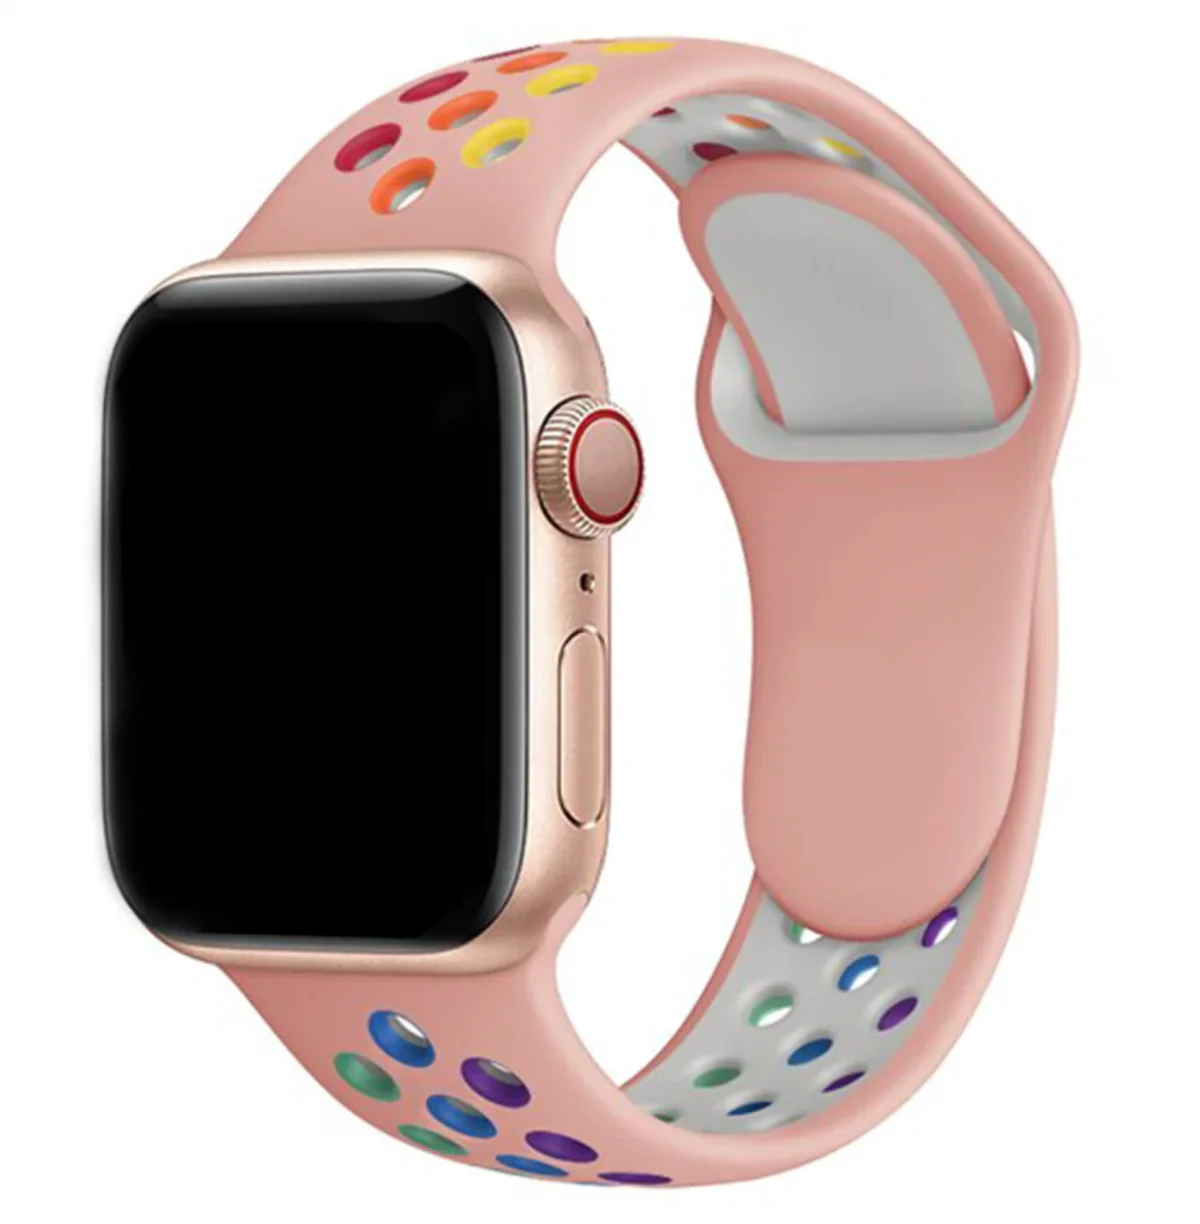 Řemínek iMore SPORT pro Apple Watch Series 1/2/3 (38mm) - Pink Oxford/Rainbow